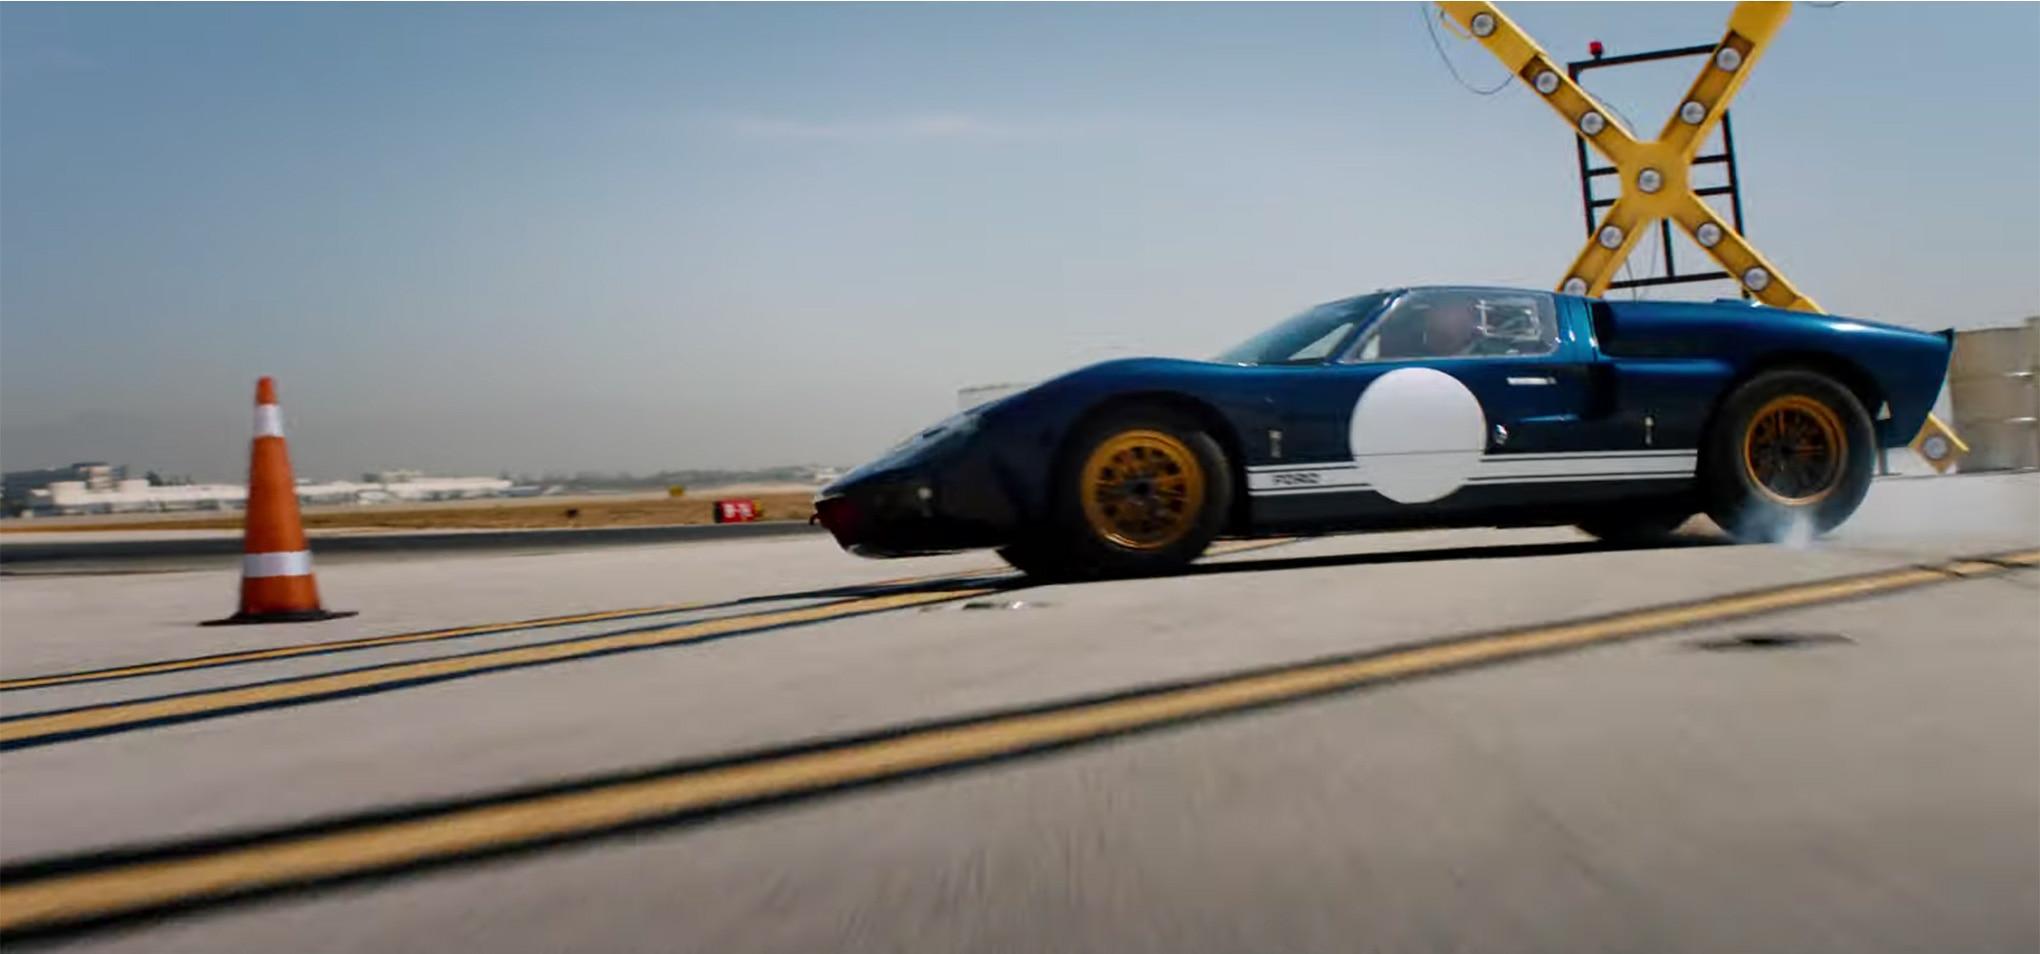 Ford v Ferrari Movie Trailer: Accuracy v Entertainment